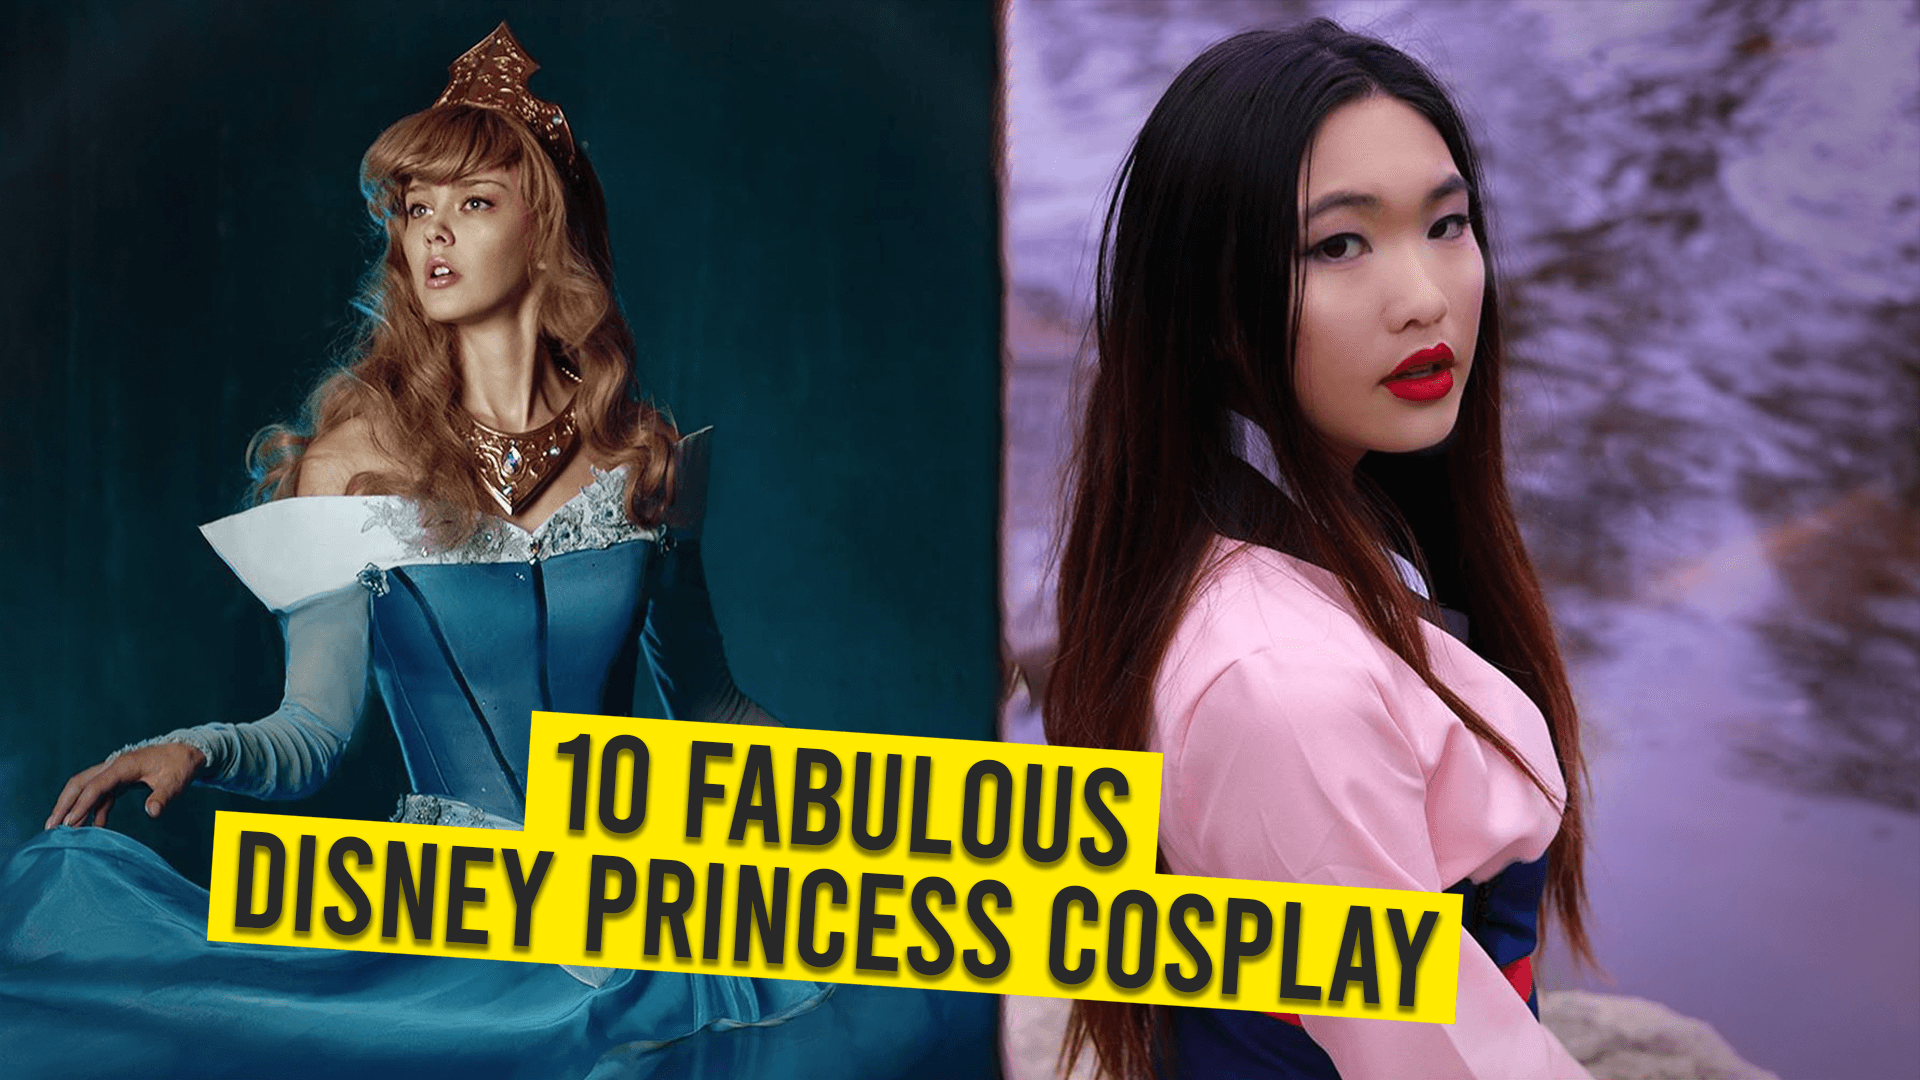 10 Fabulous Disney Princess Cosplay